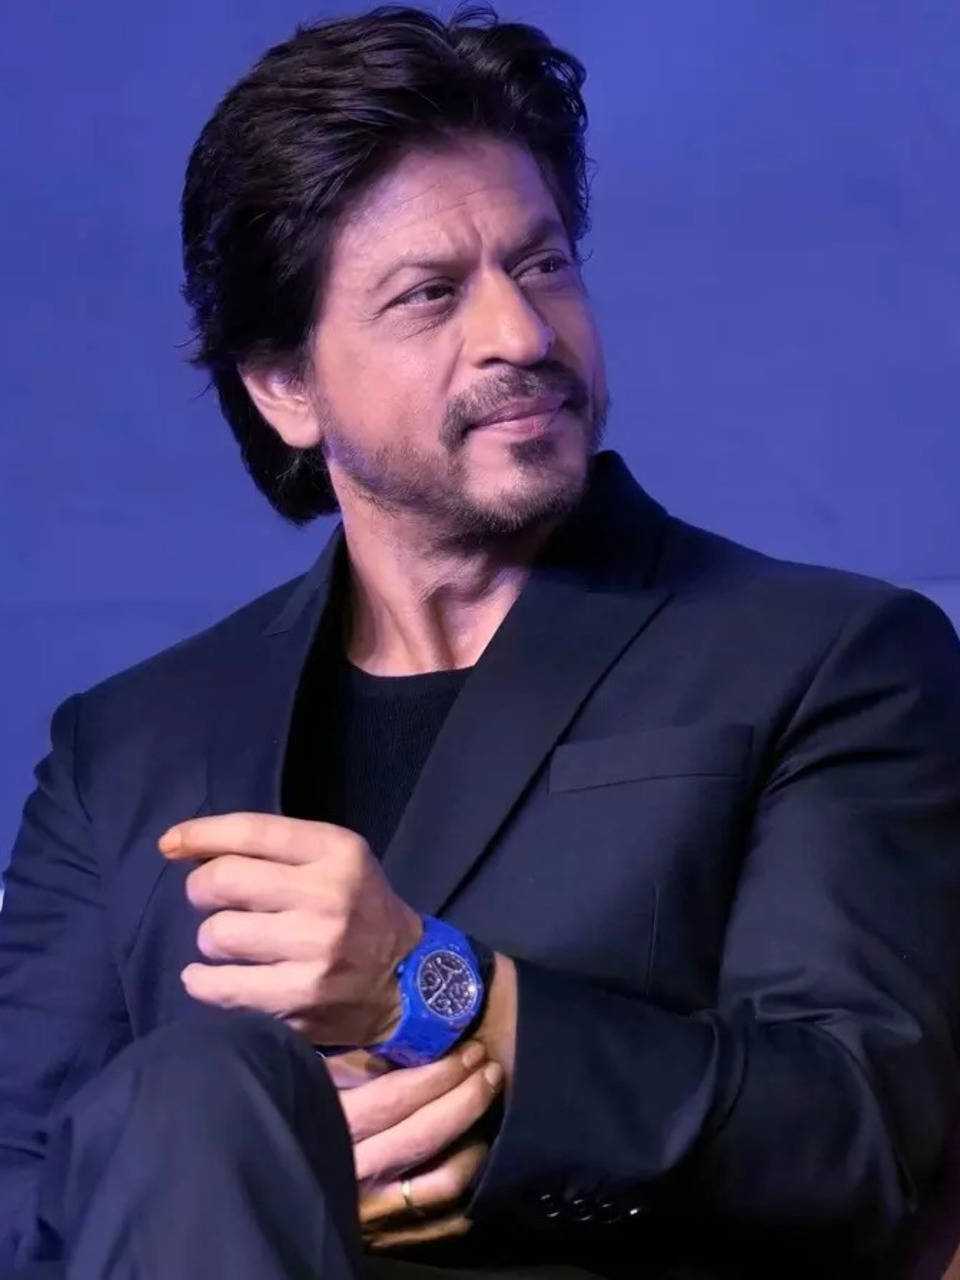 From Salman Khan's bracelet to Ranbir Kapoor's No. 8: Bollywood